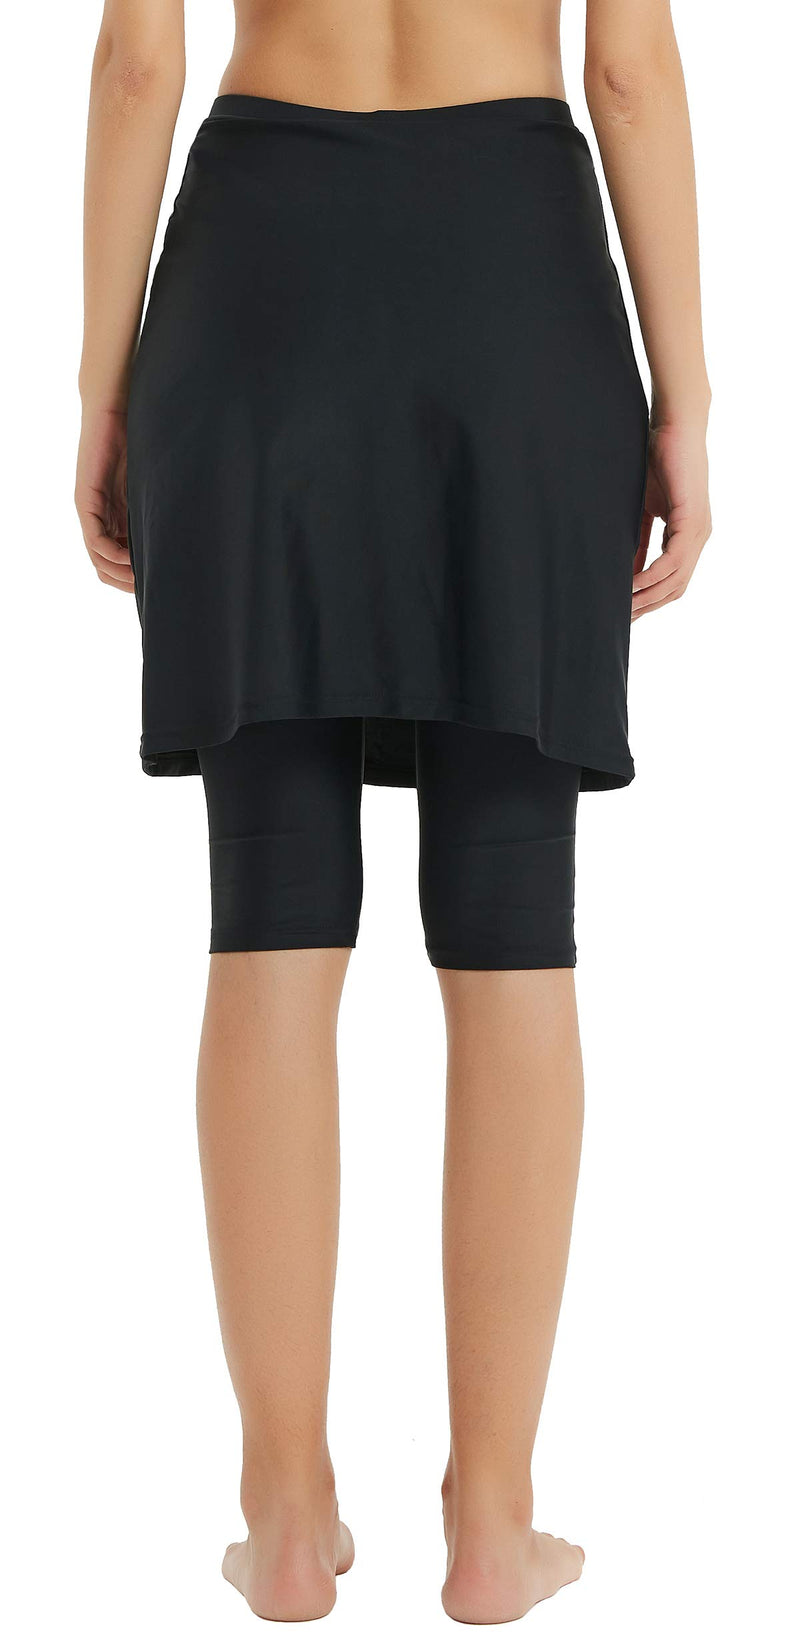 [AUSTRALIA] - Aunua Women UPF 50+ Swimming Skirt with Legging UV Sun Protection Swim Skort Capris Shorts Black X-Large 